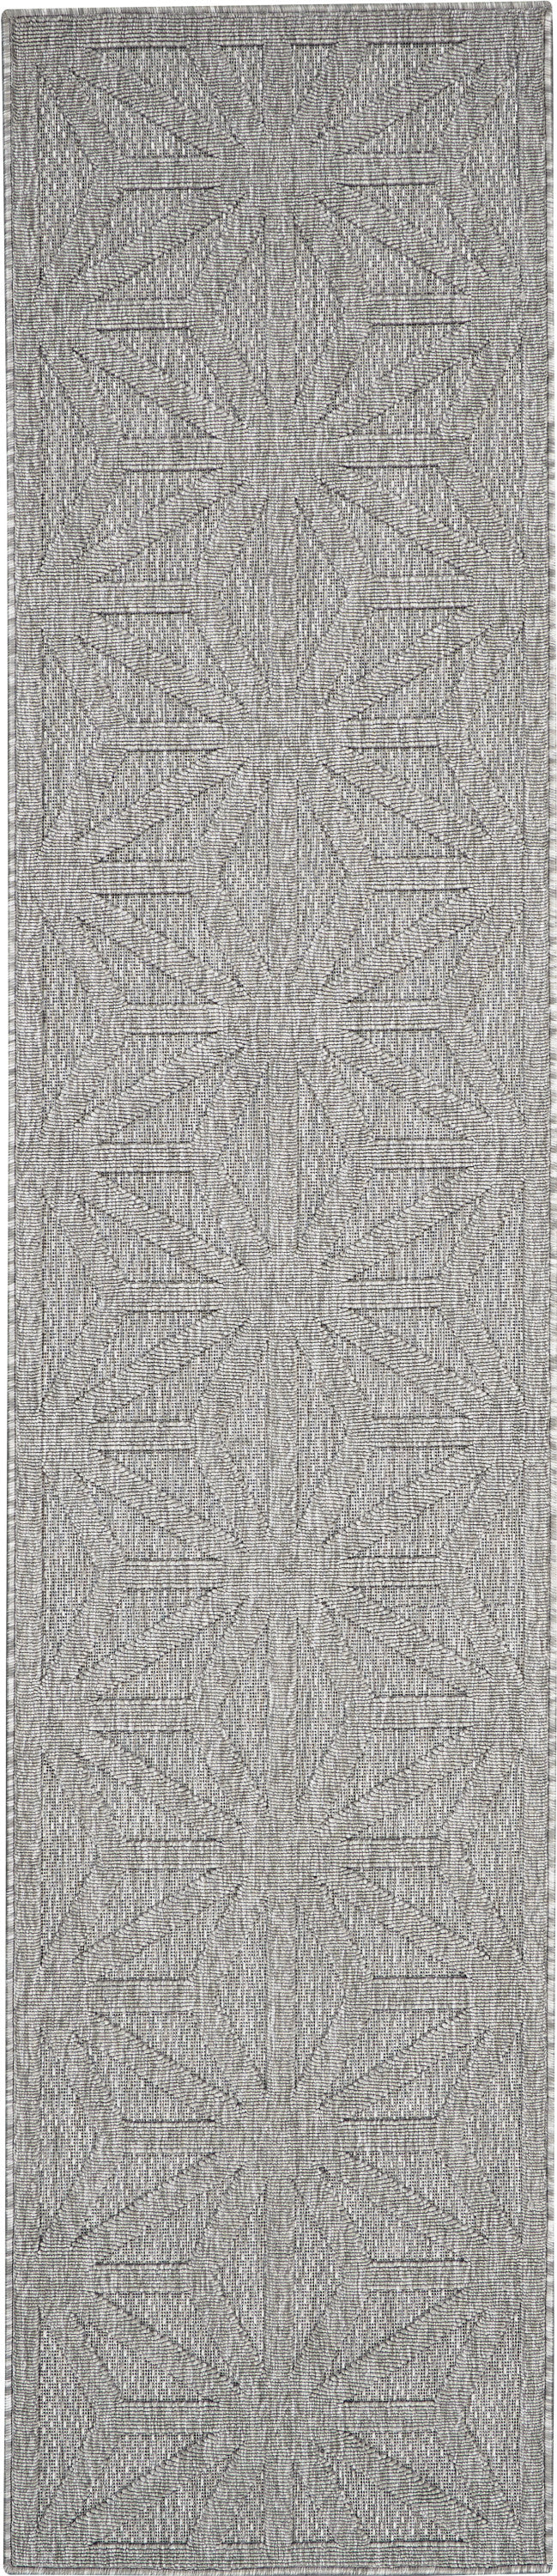 cozumel light grey rug by nourison 99446200136 redo 3